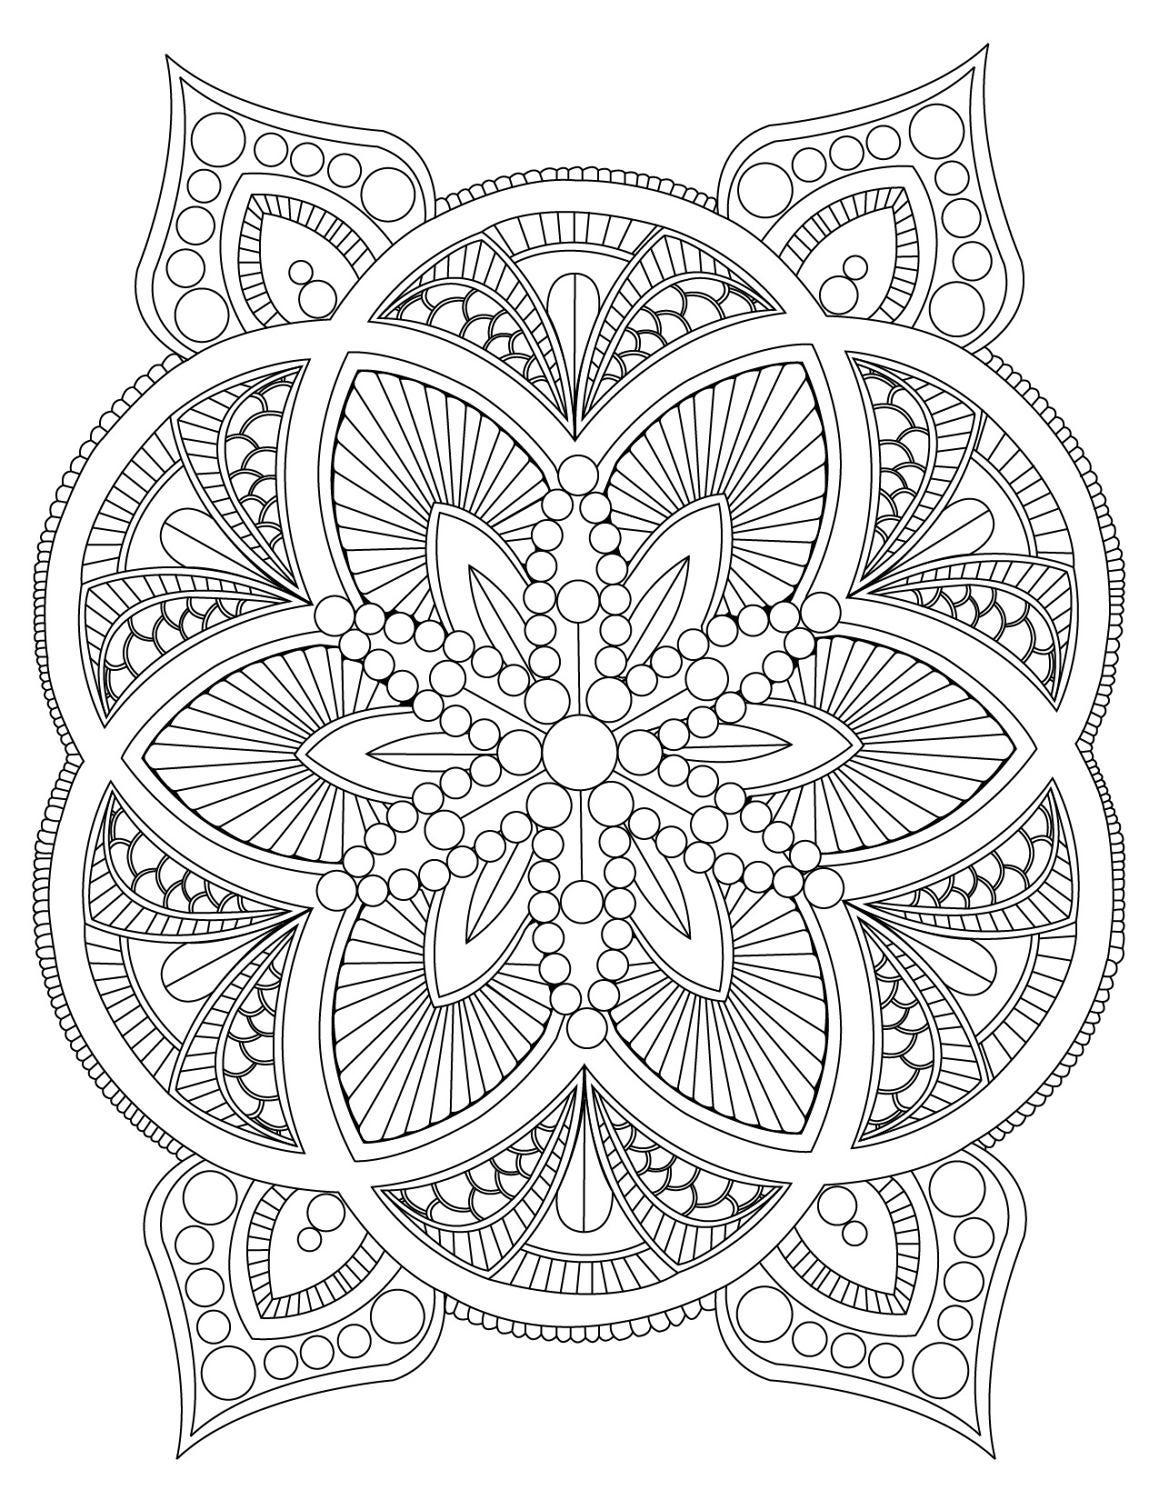 Download Abstract Mandala Coloring Page for Adults DIY Printable